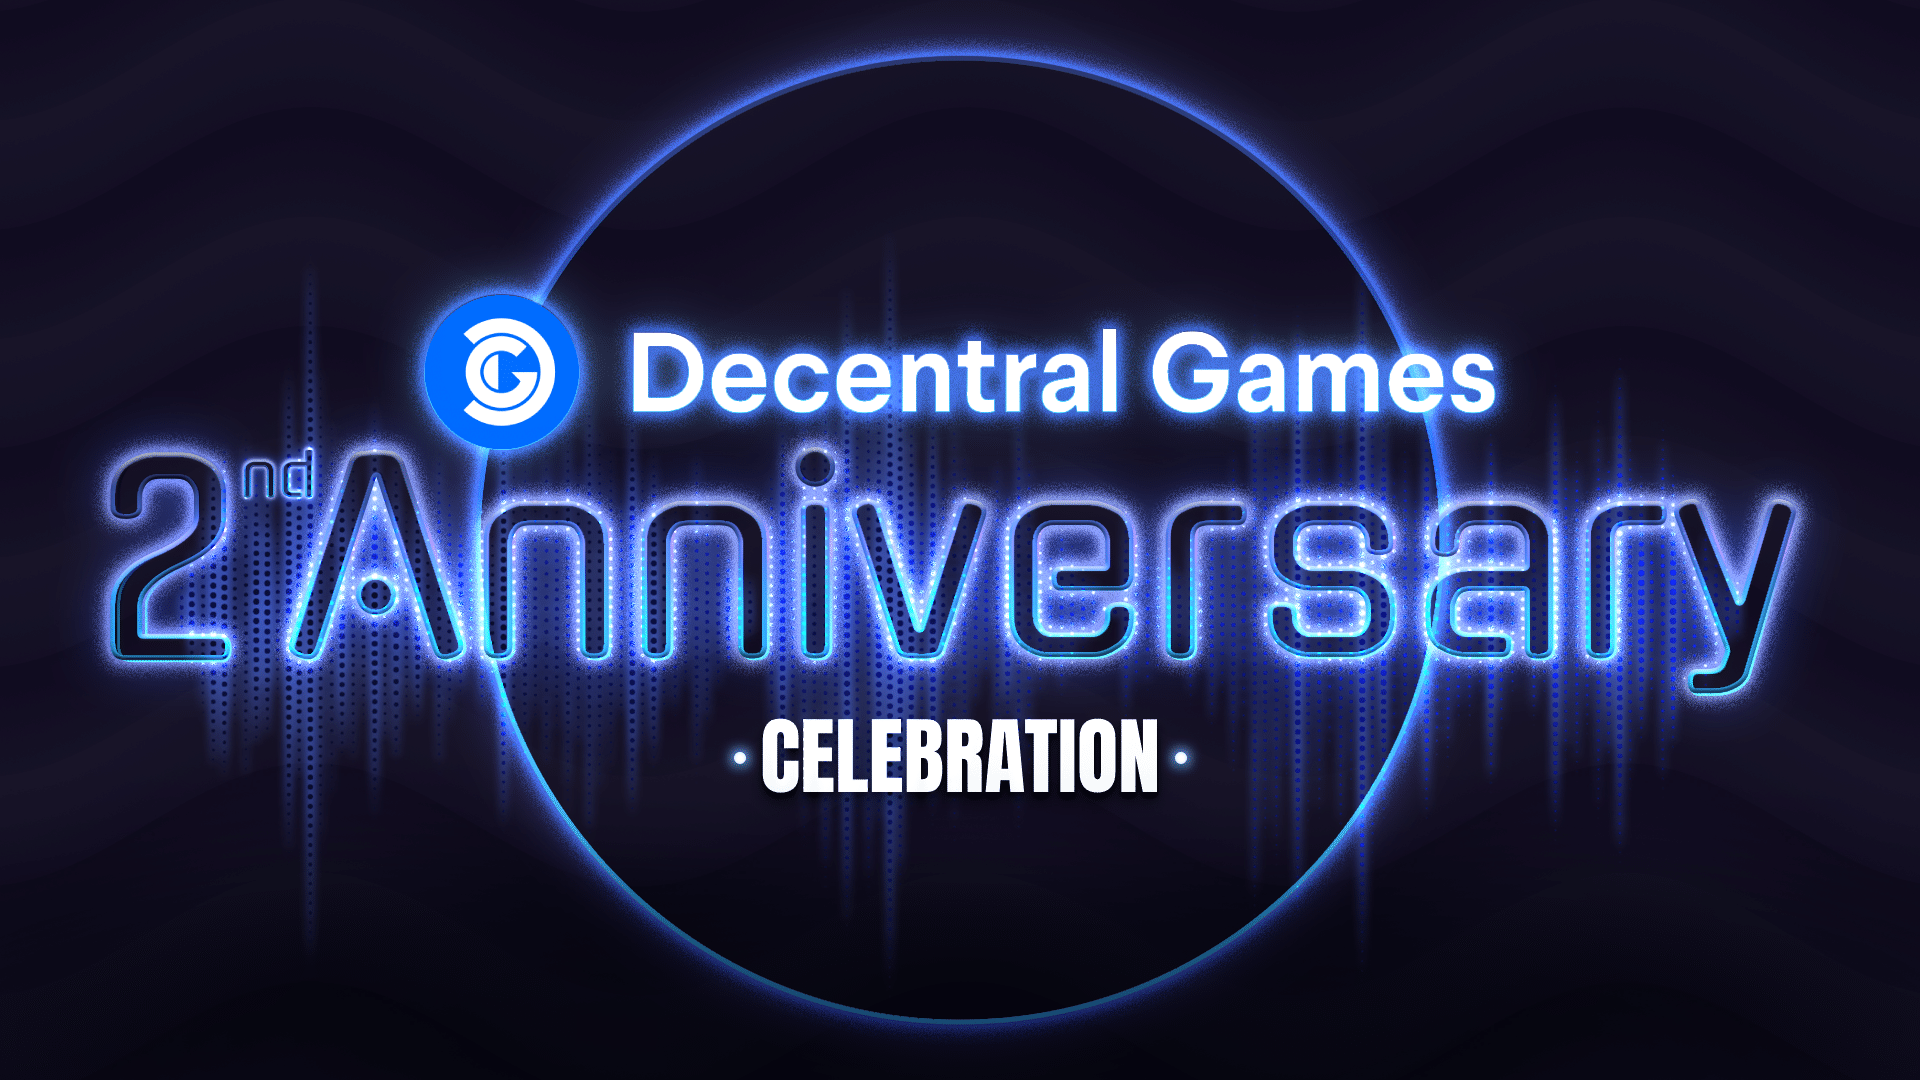 Decentral Games 2nd anniversary